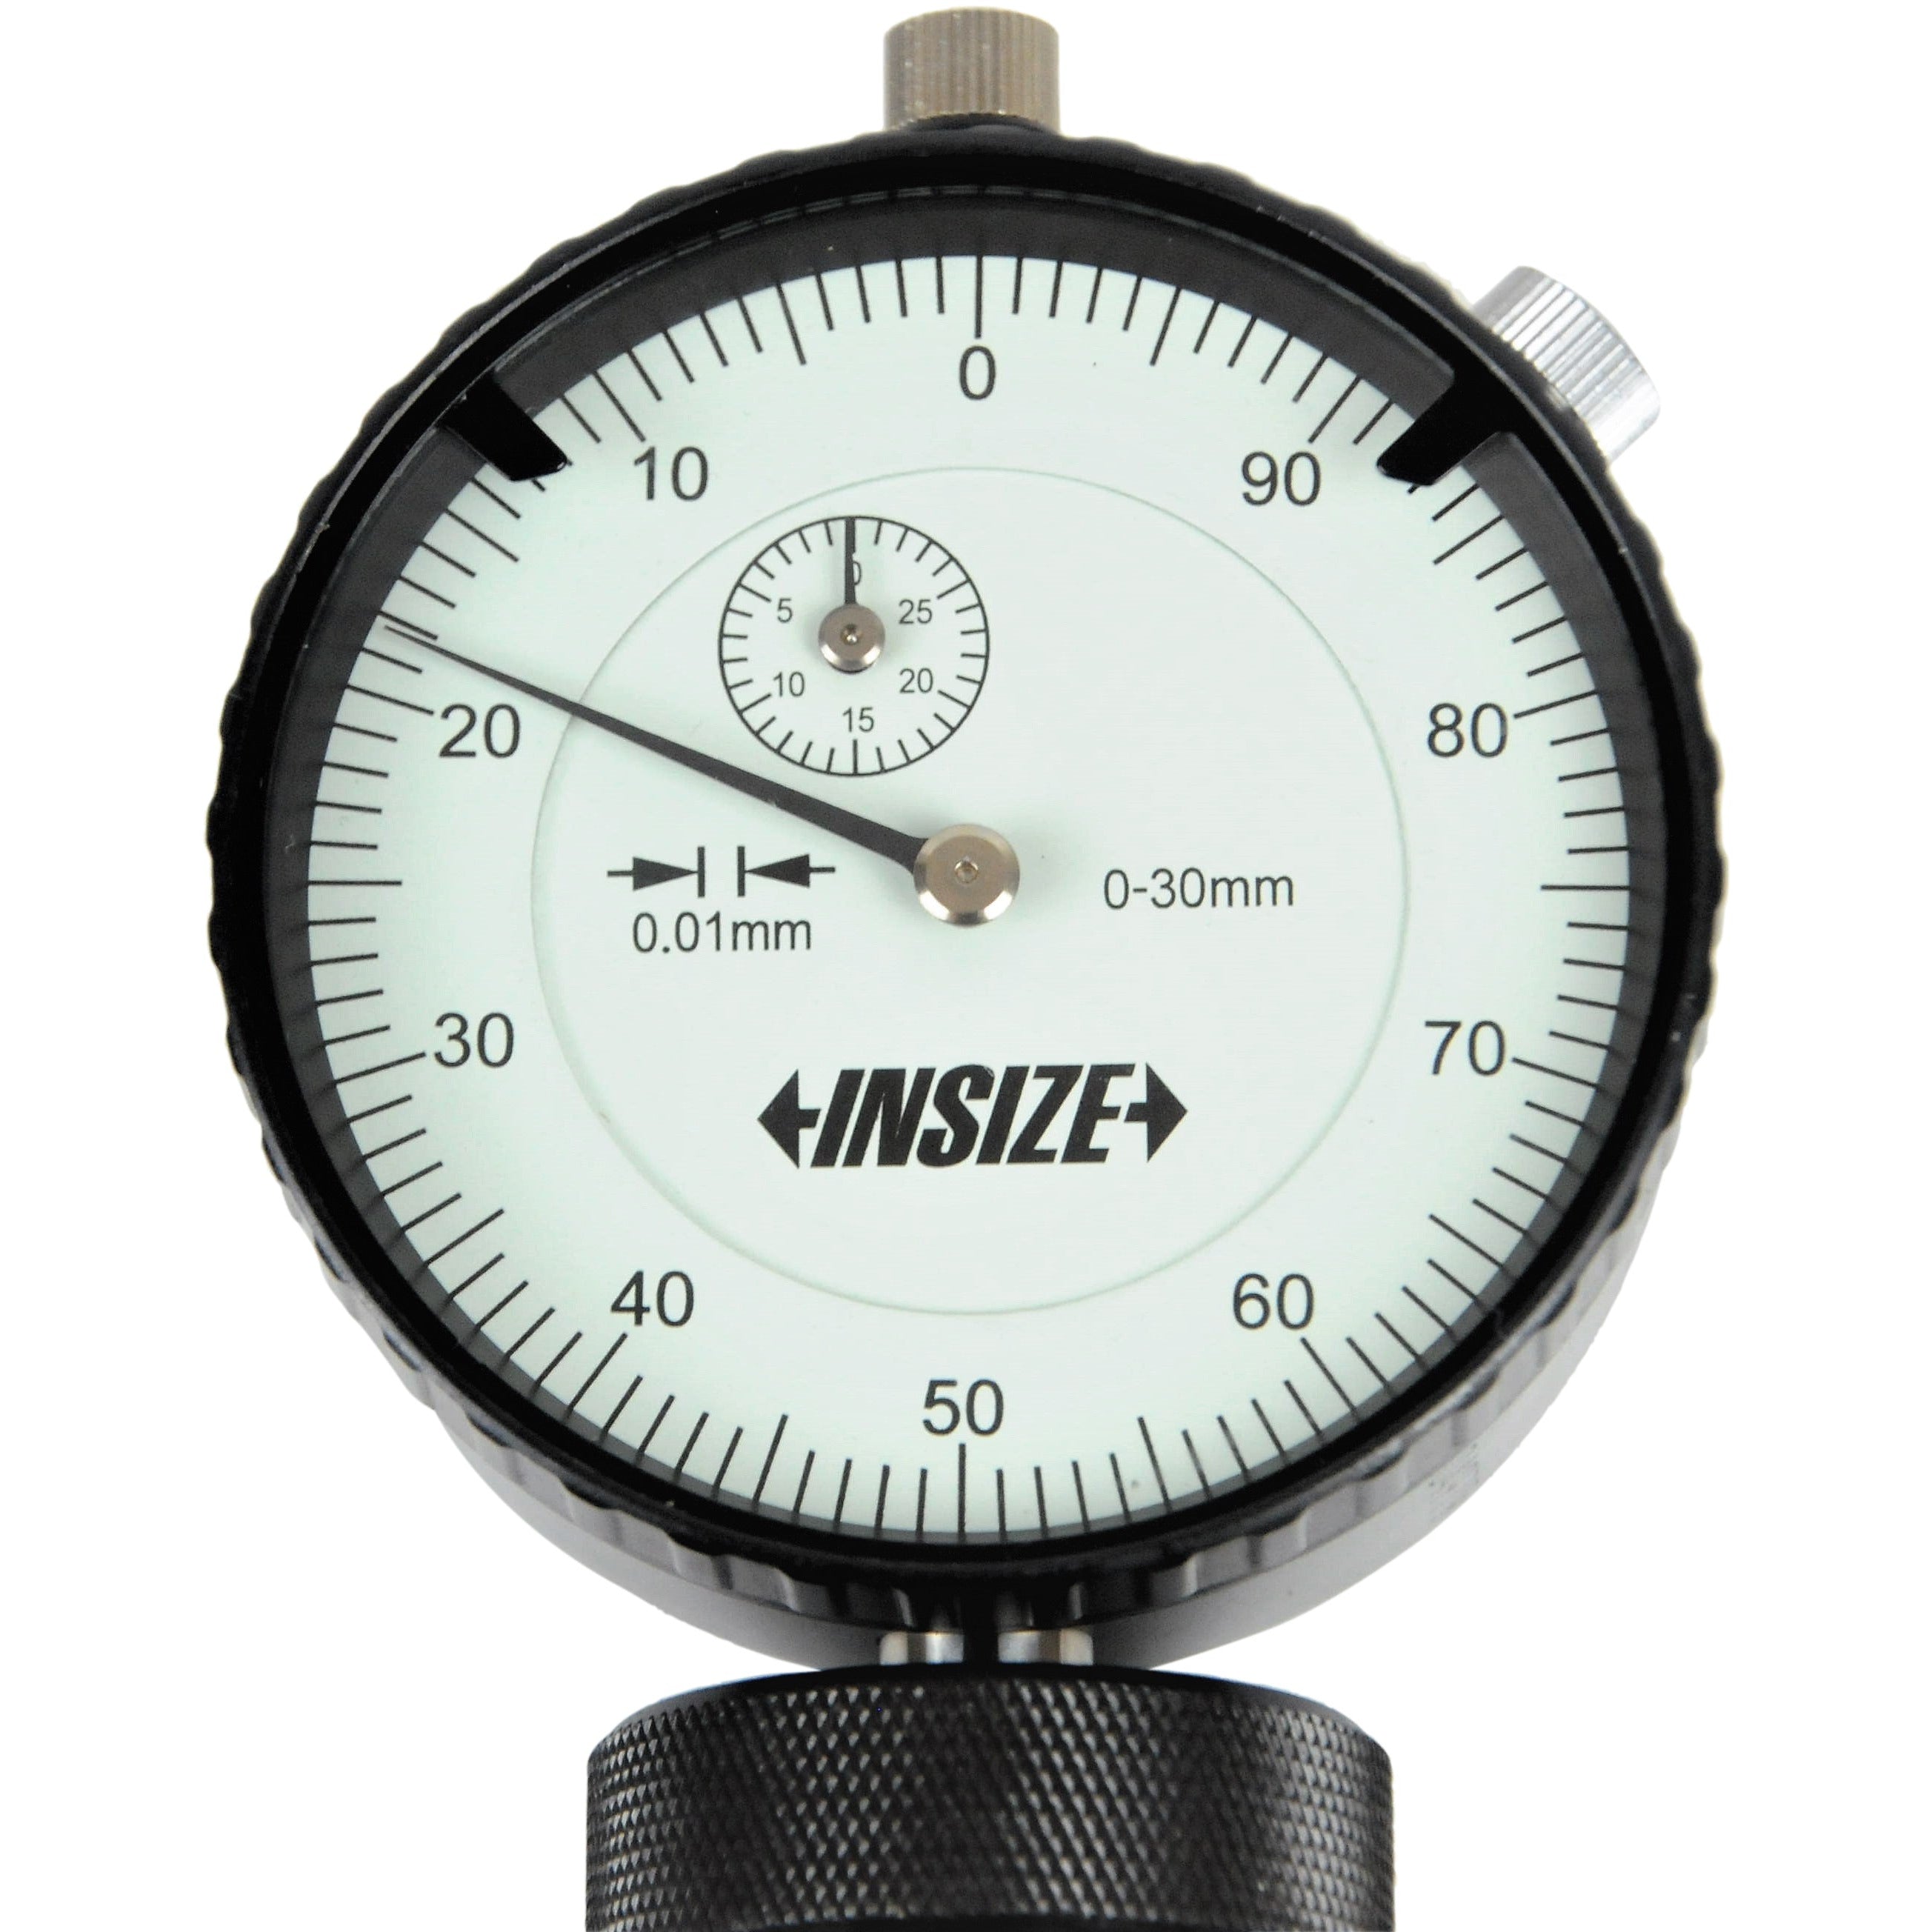 Insize Dial Depth Gauge 0-300mm x 0.01mm Range Series 2342-202